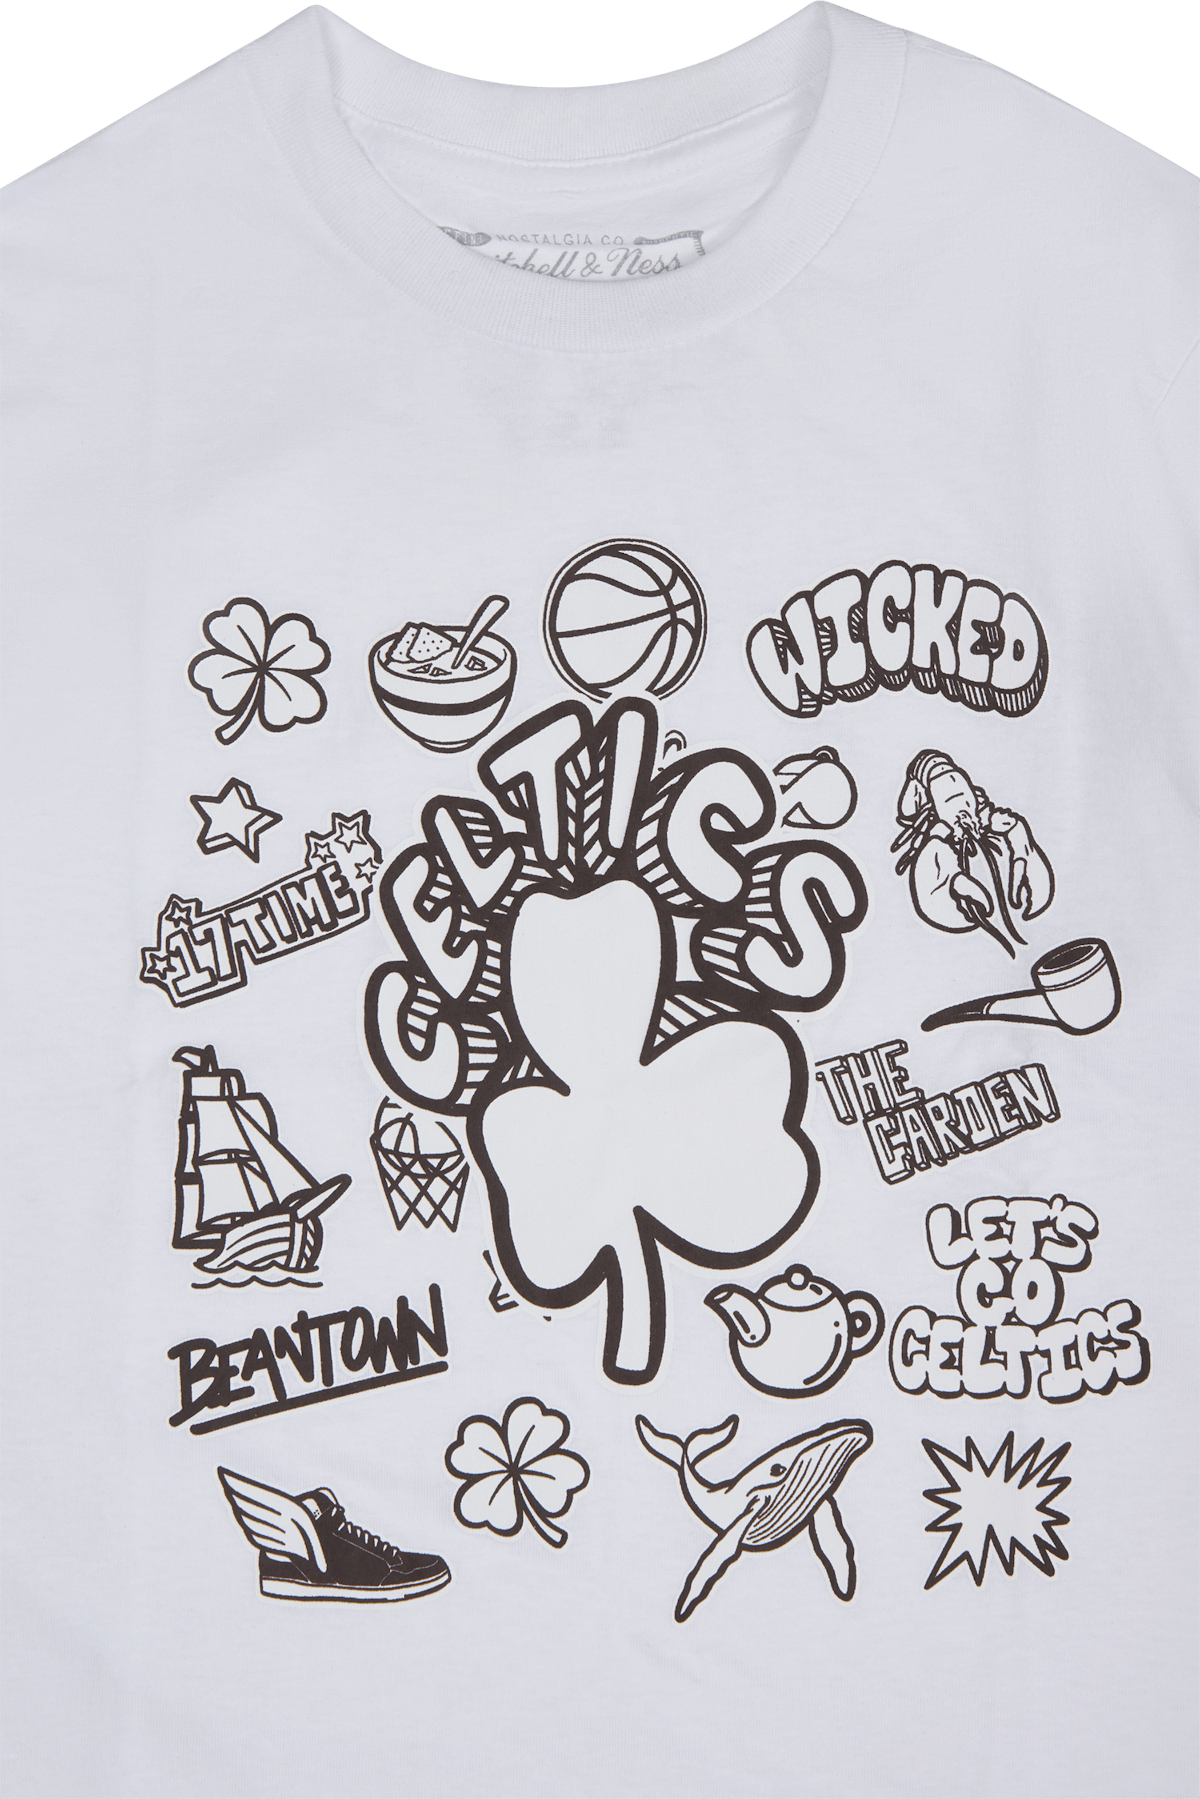 Celtics Doodle Ss Tee